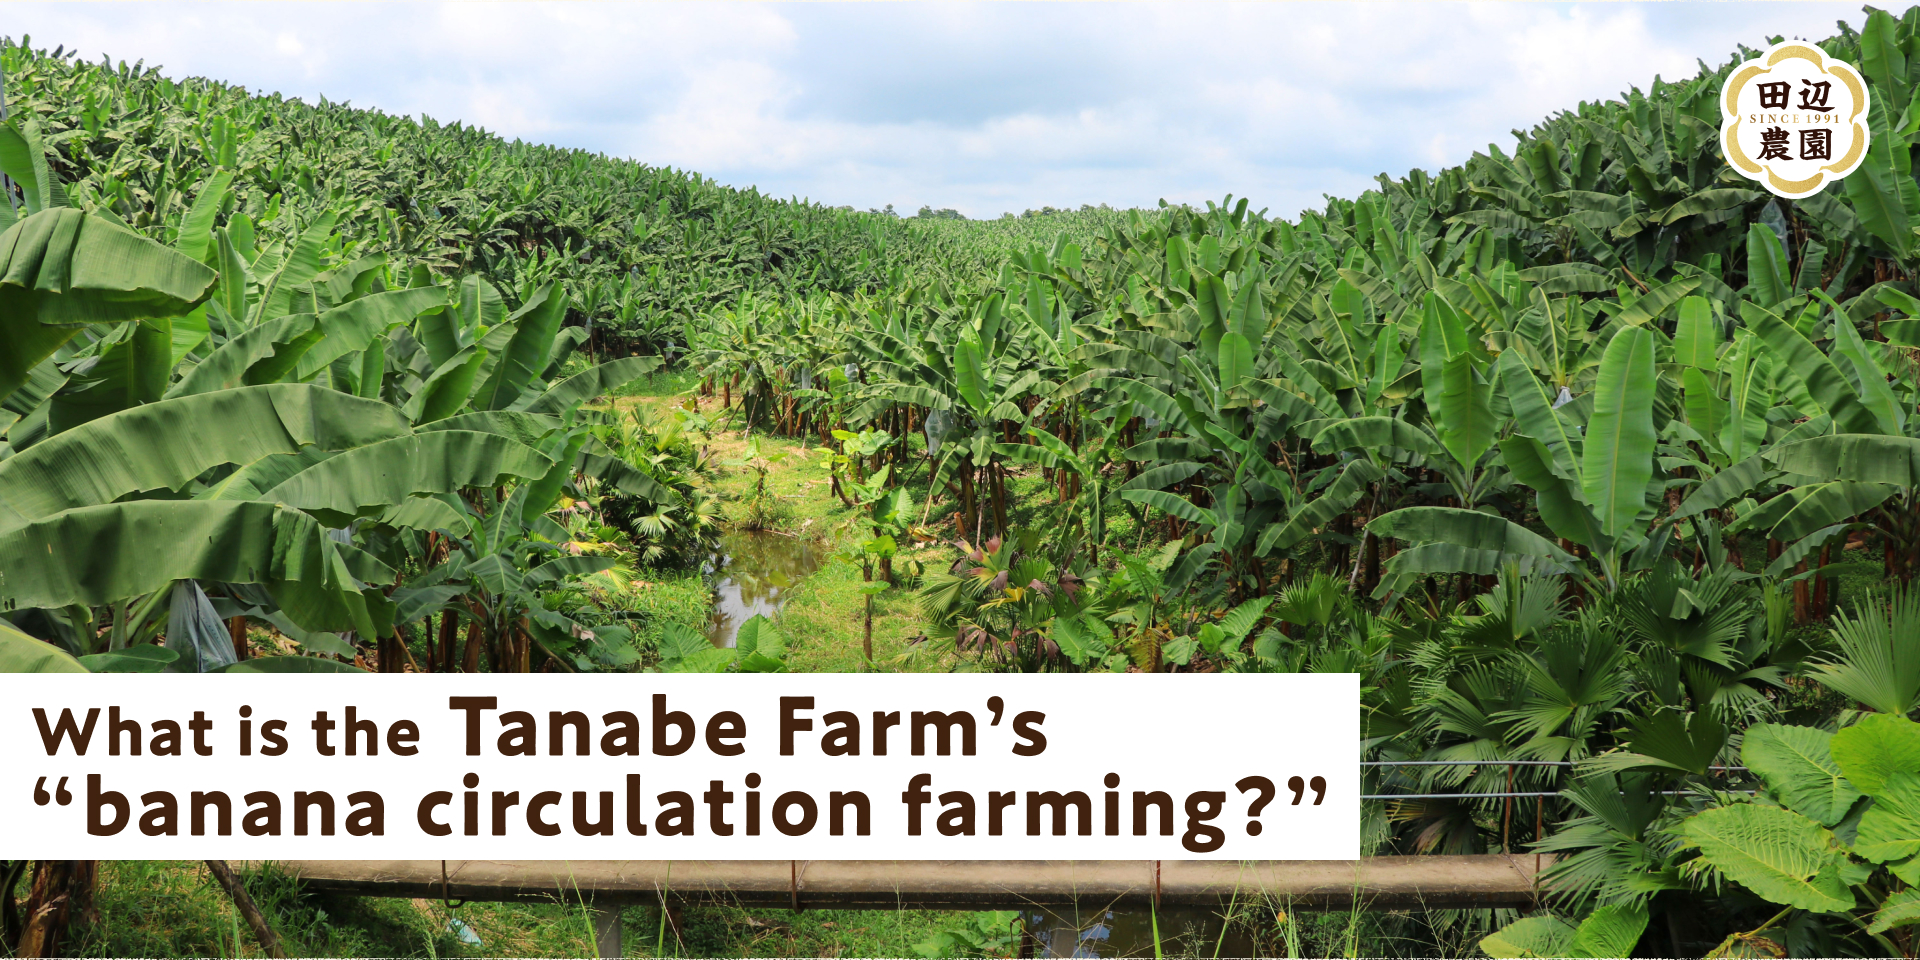 What is the Tanabe Farm’s "banana circulation farming?"